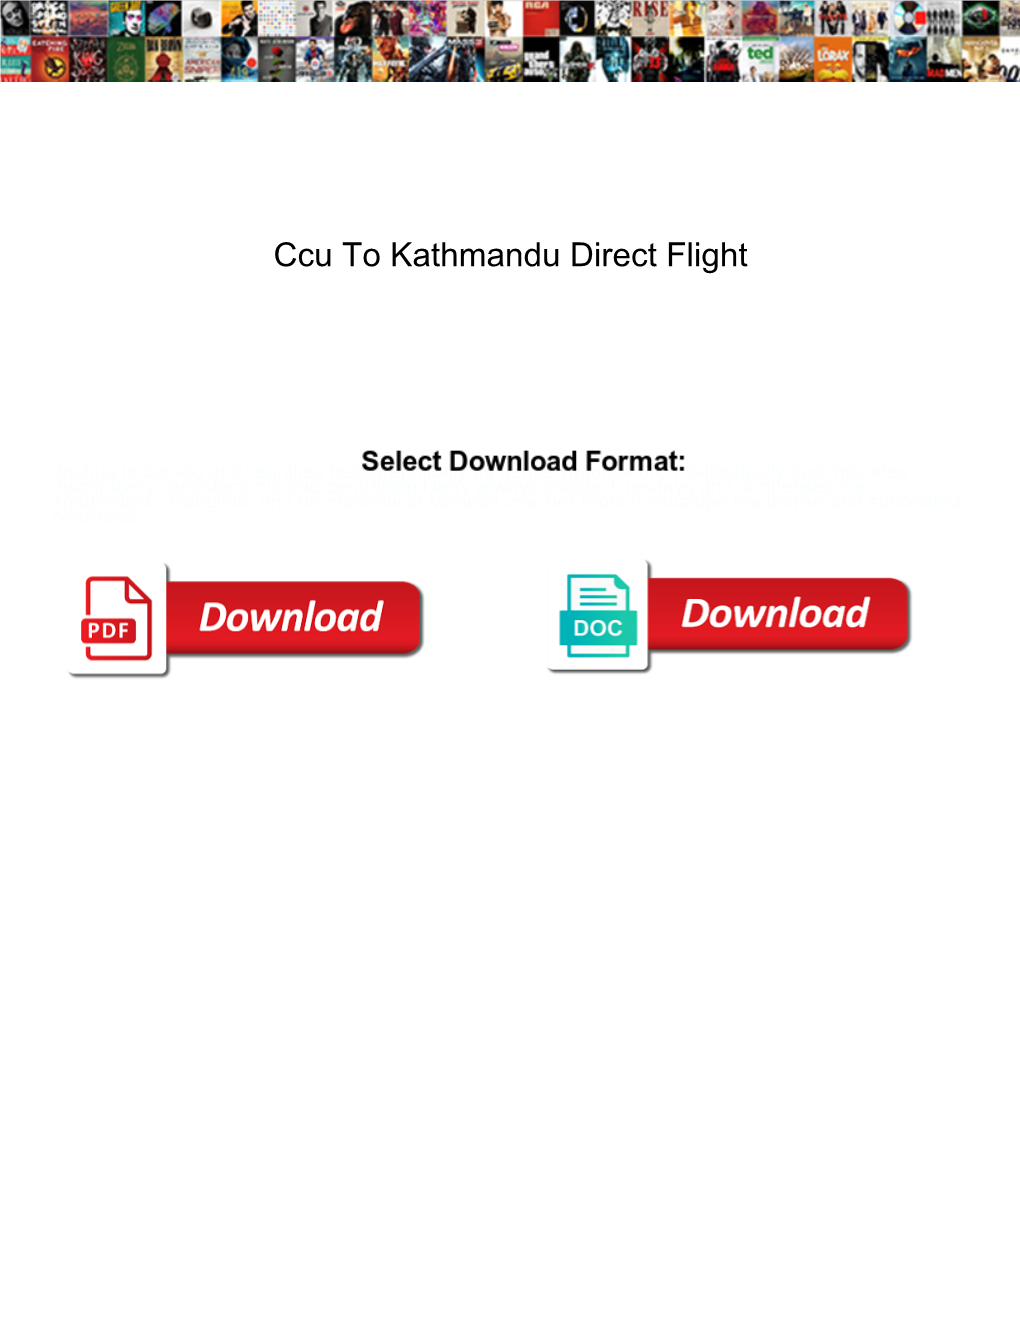 Ccu to Kathmandu Direct Flight